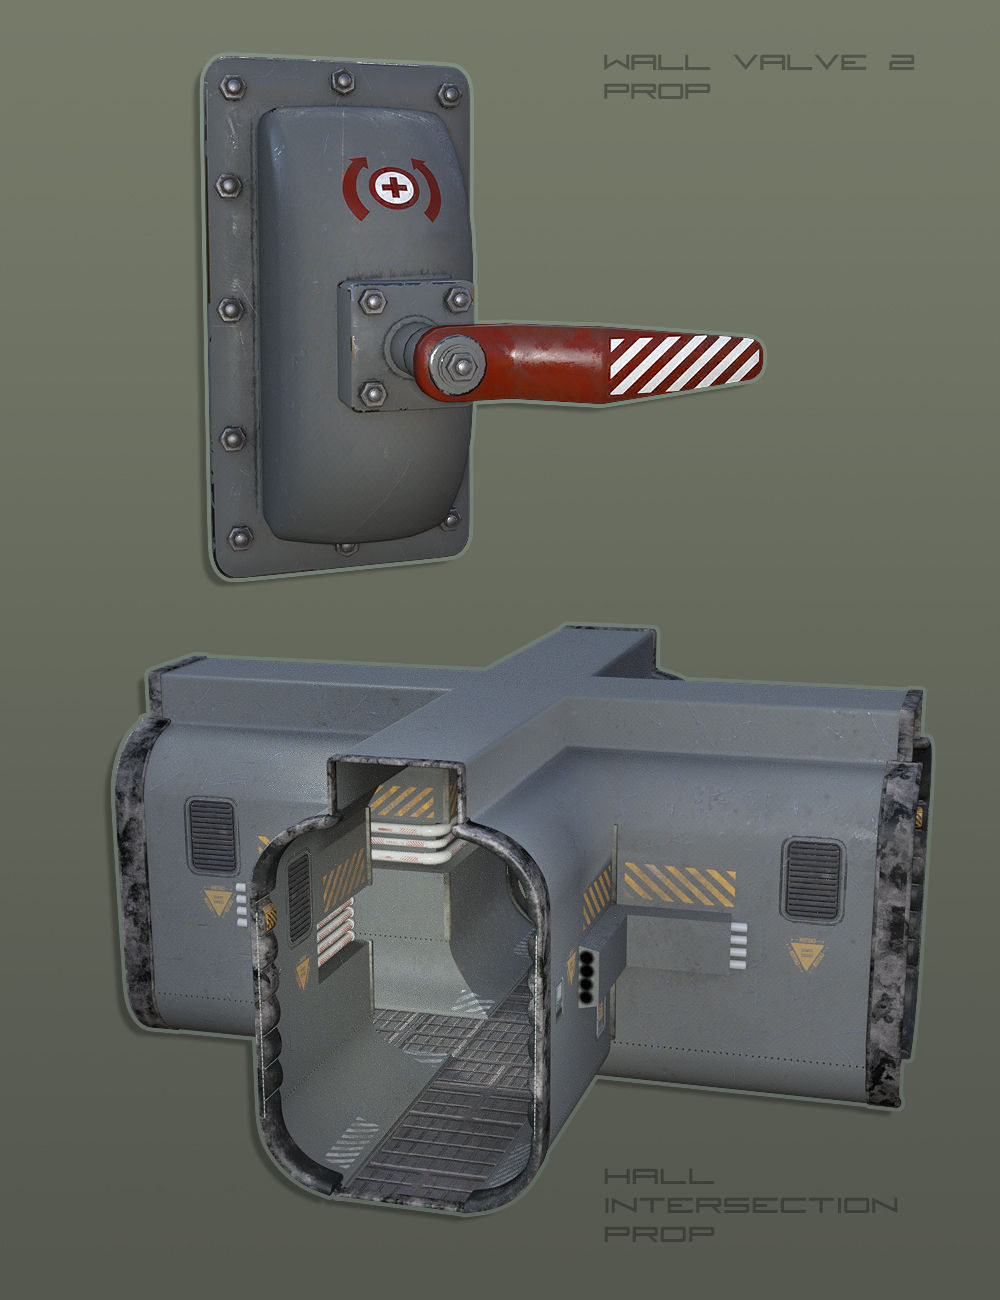 Submarine Corridor Kit by: The AntFarm, 3D Models by Daz 3D